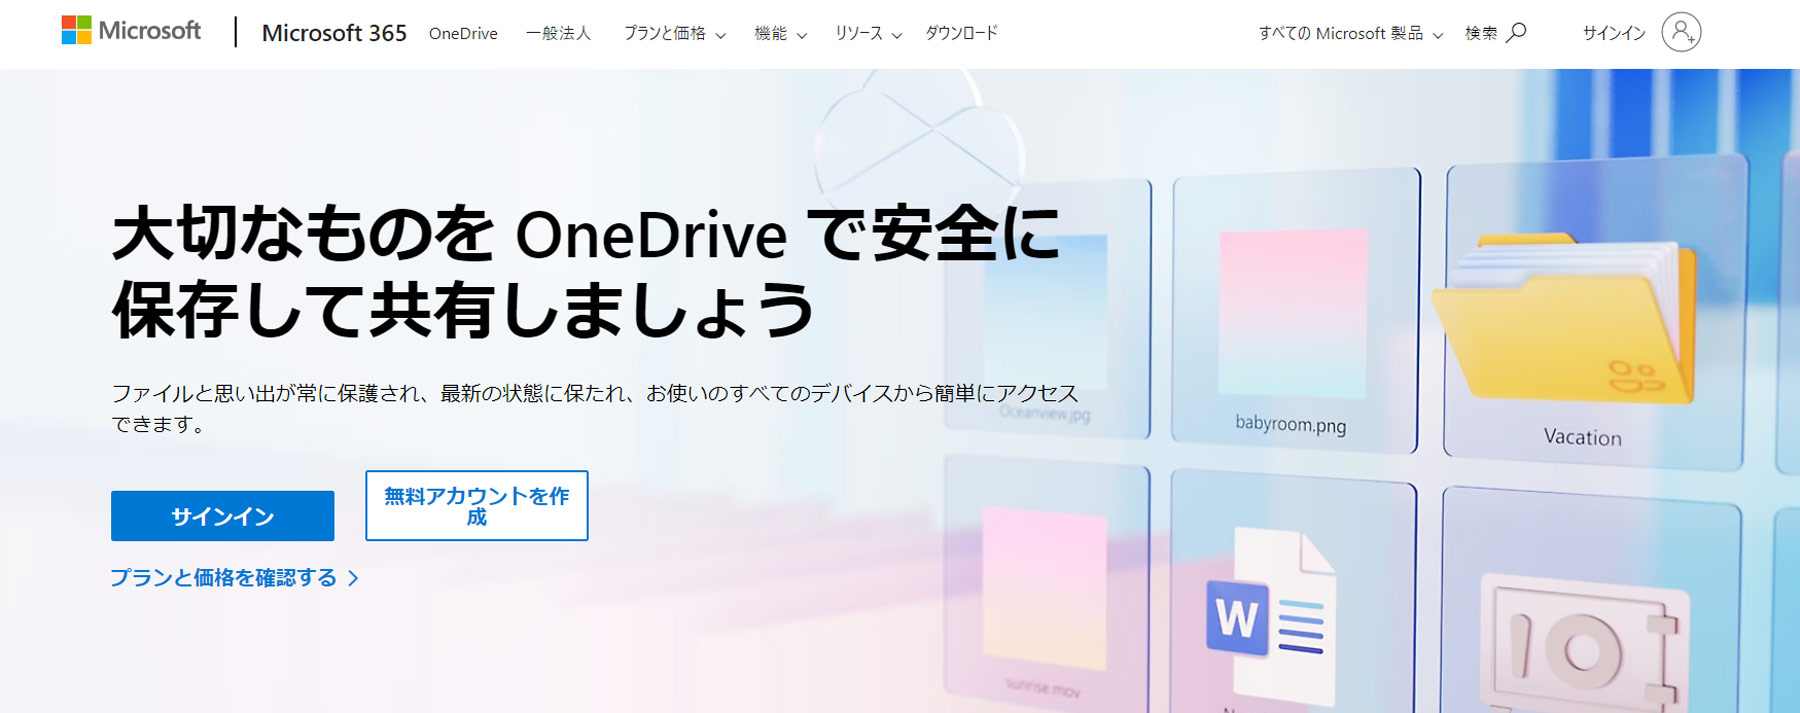 OneDrive公式Webサイト